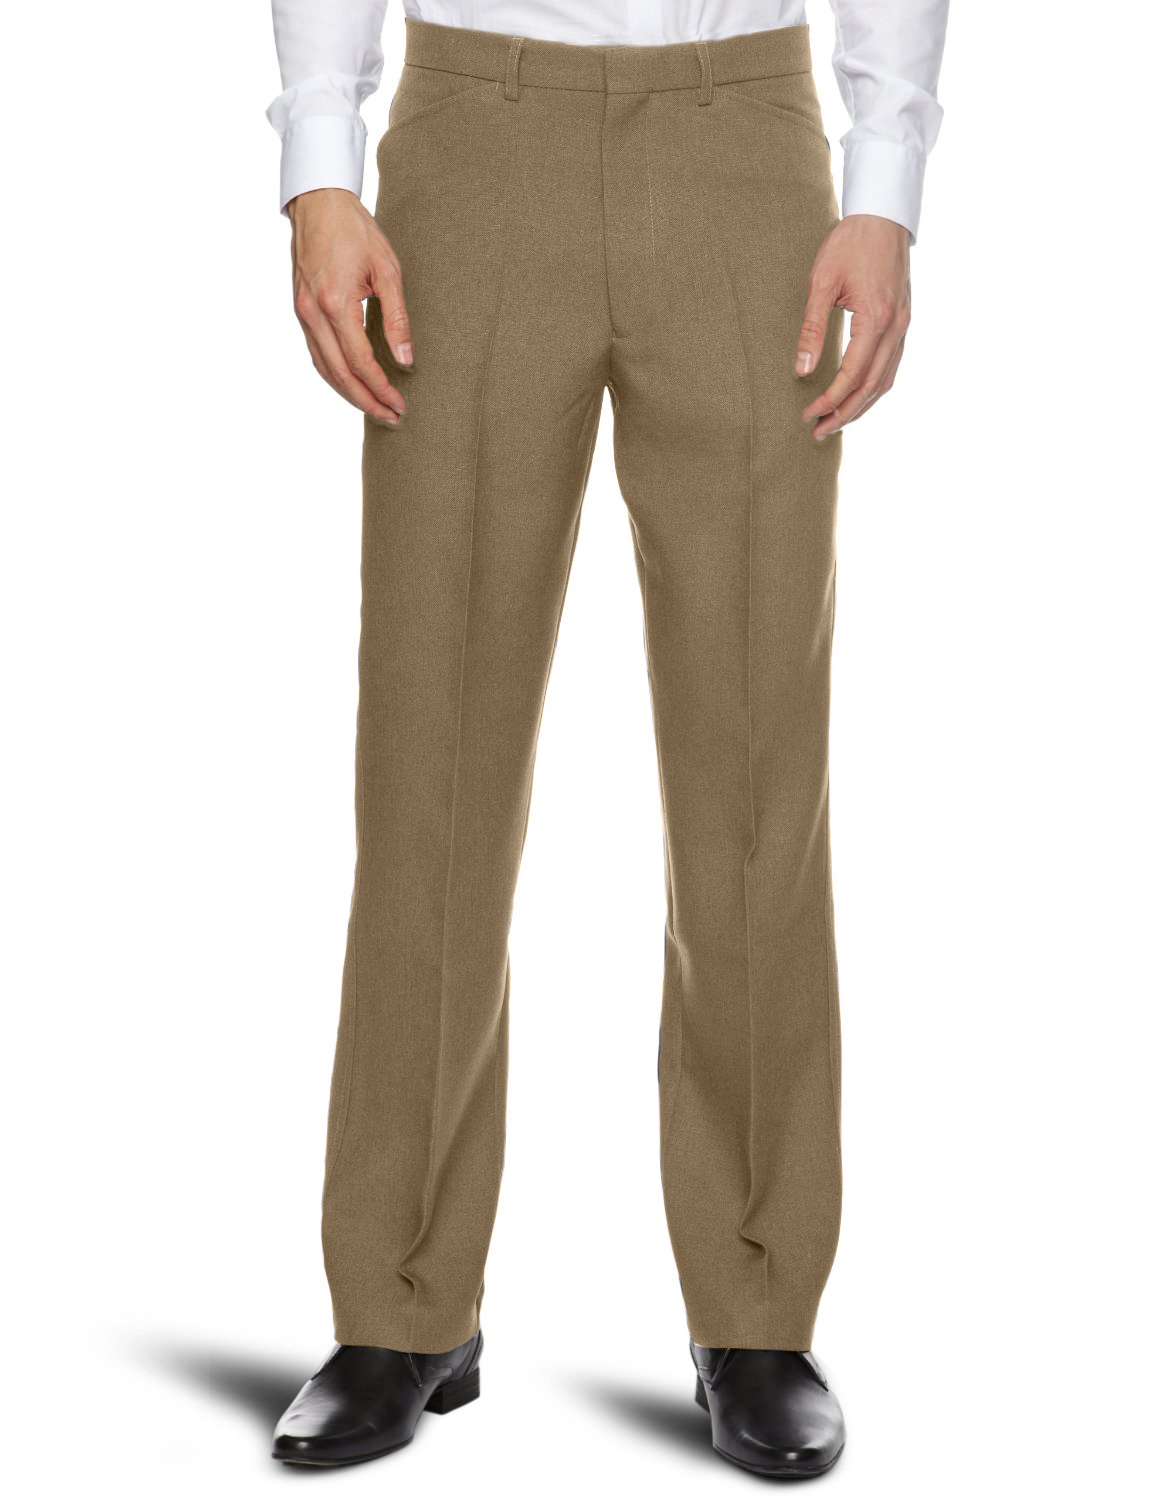 Mens Farah ANTI STAIN Trousers Brown Hopsack Weave | eBay